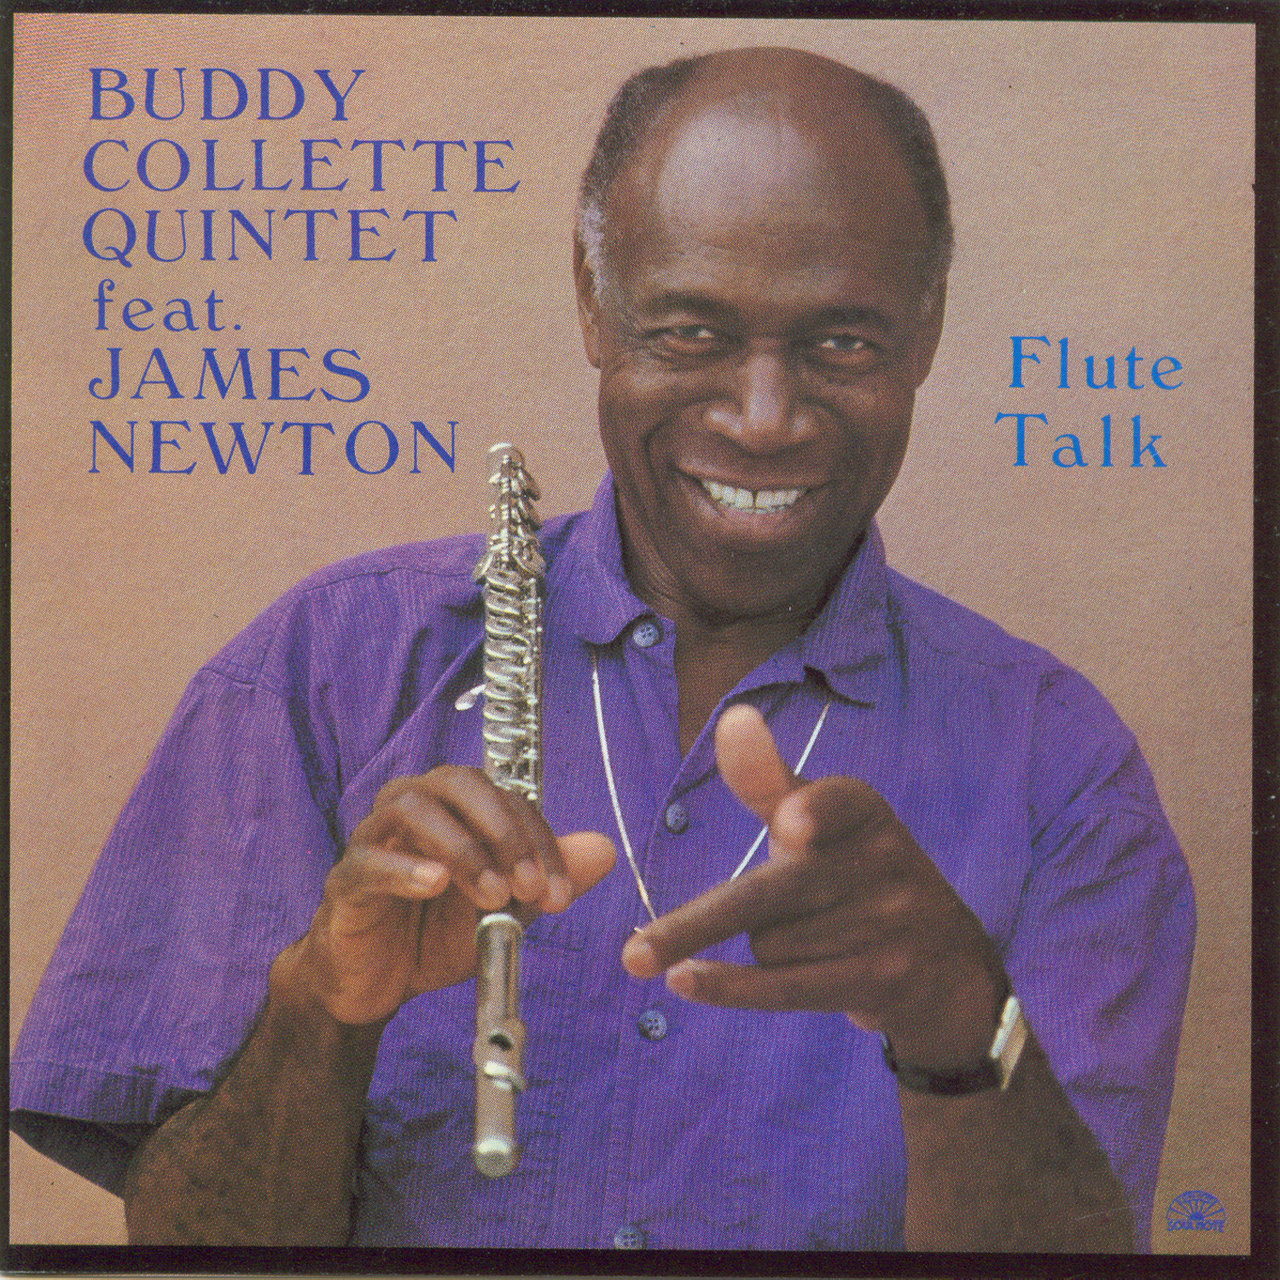 Buddy Collette Quintet featuring James Newton 'Flute Talk'